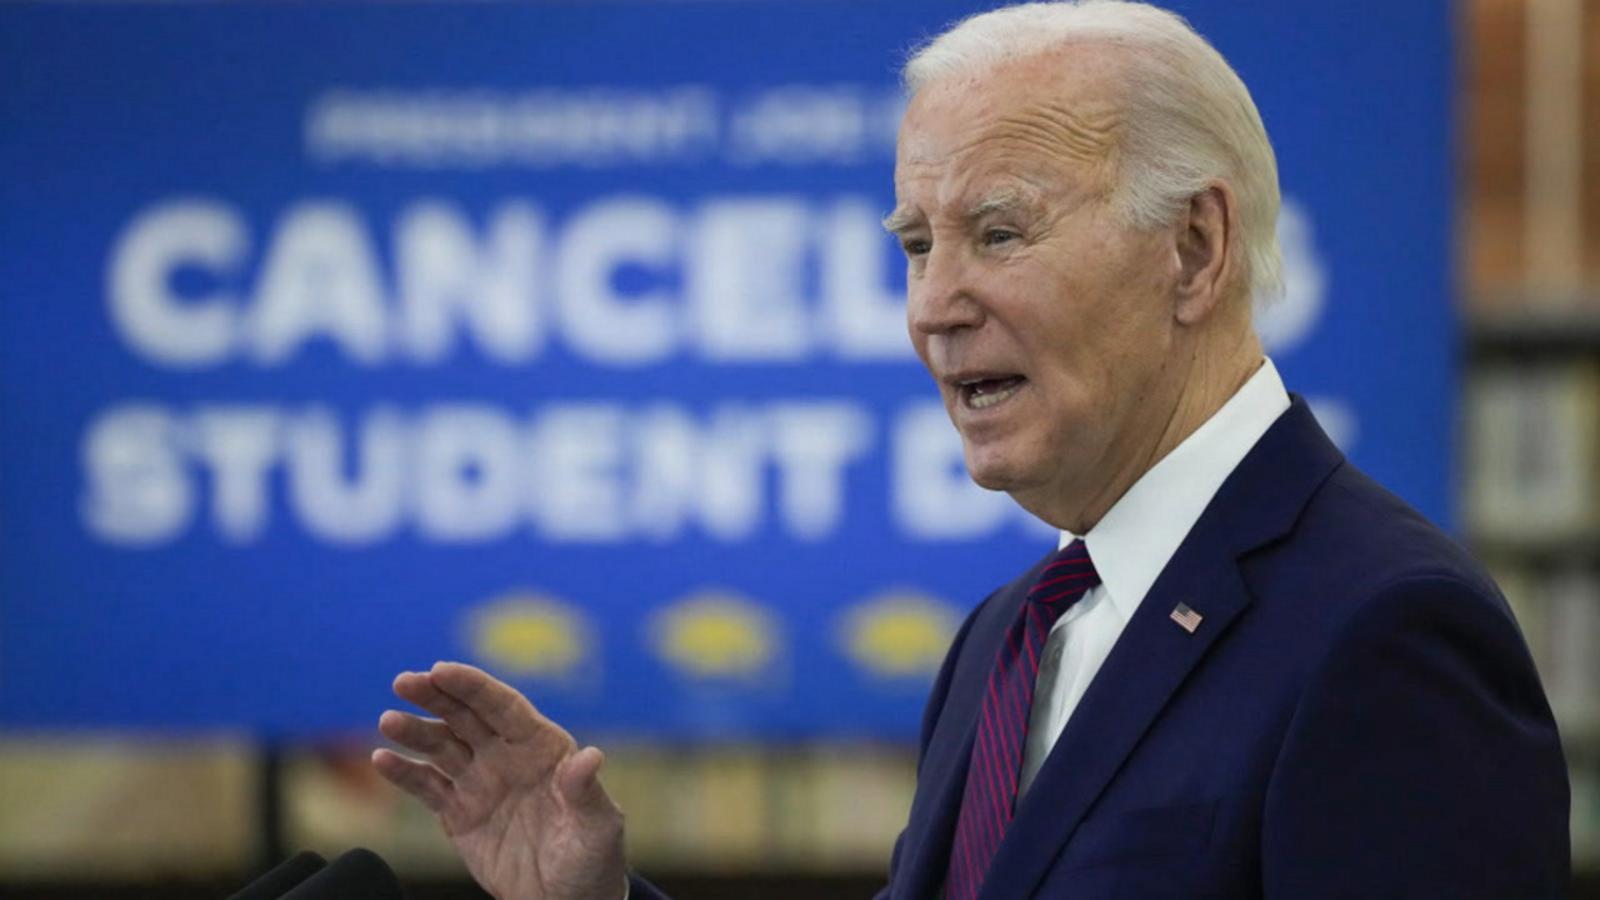 VIDEO: Biden to reveal new student loan forgiveness plan